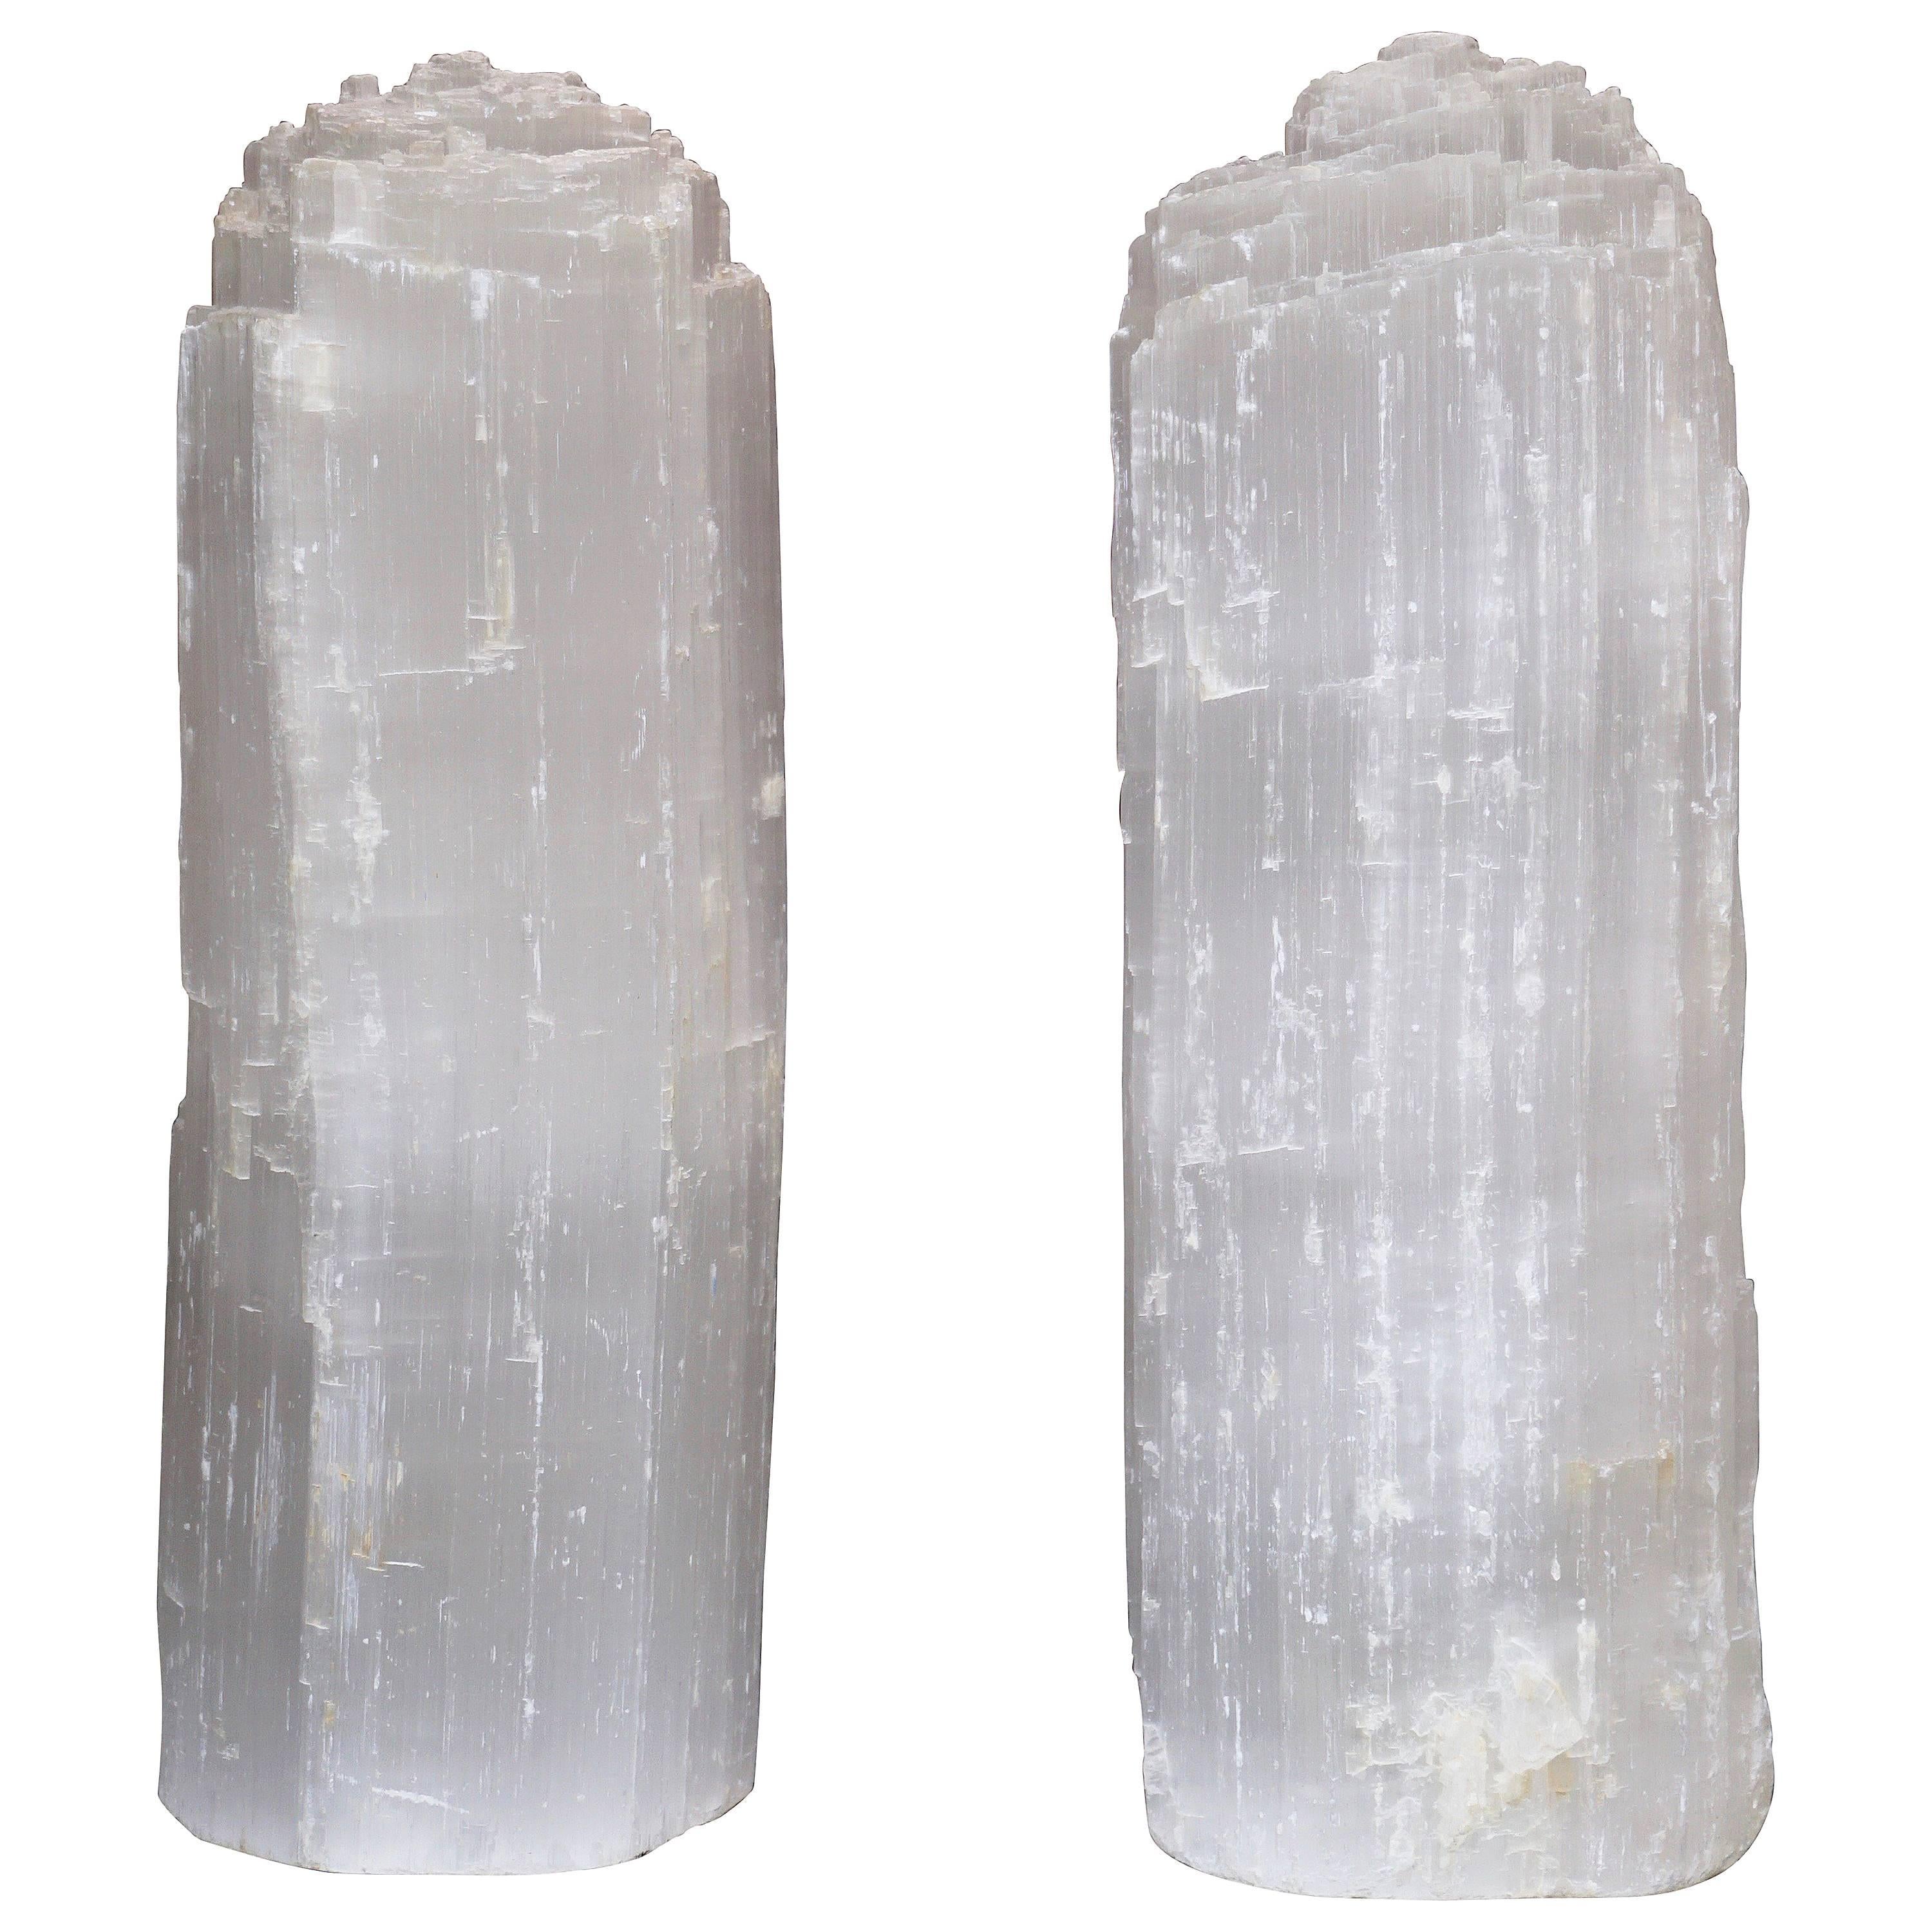 One Selenite Rock Crystal Quartz Table Lamp